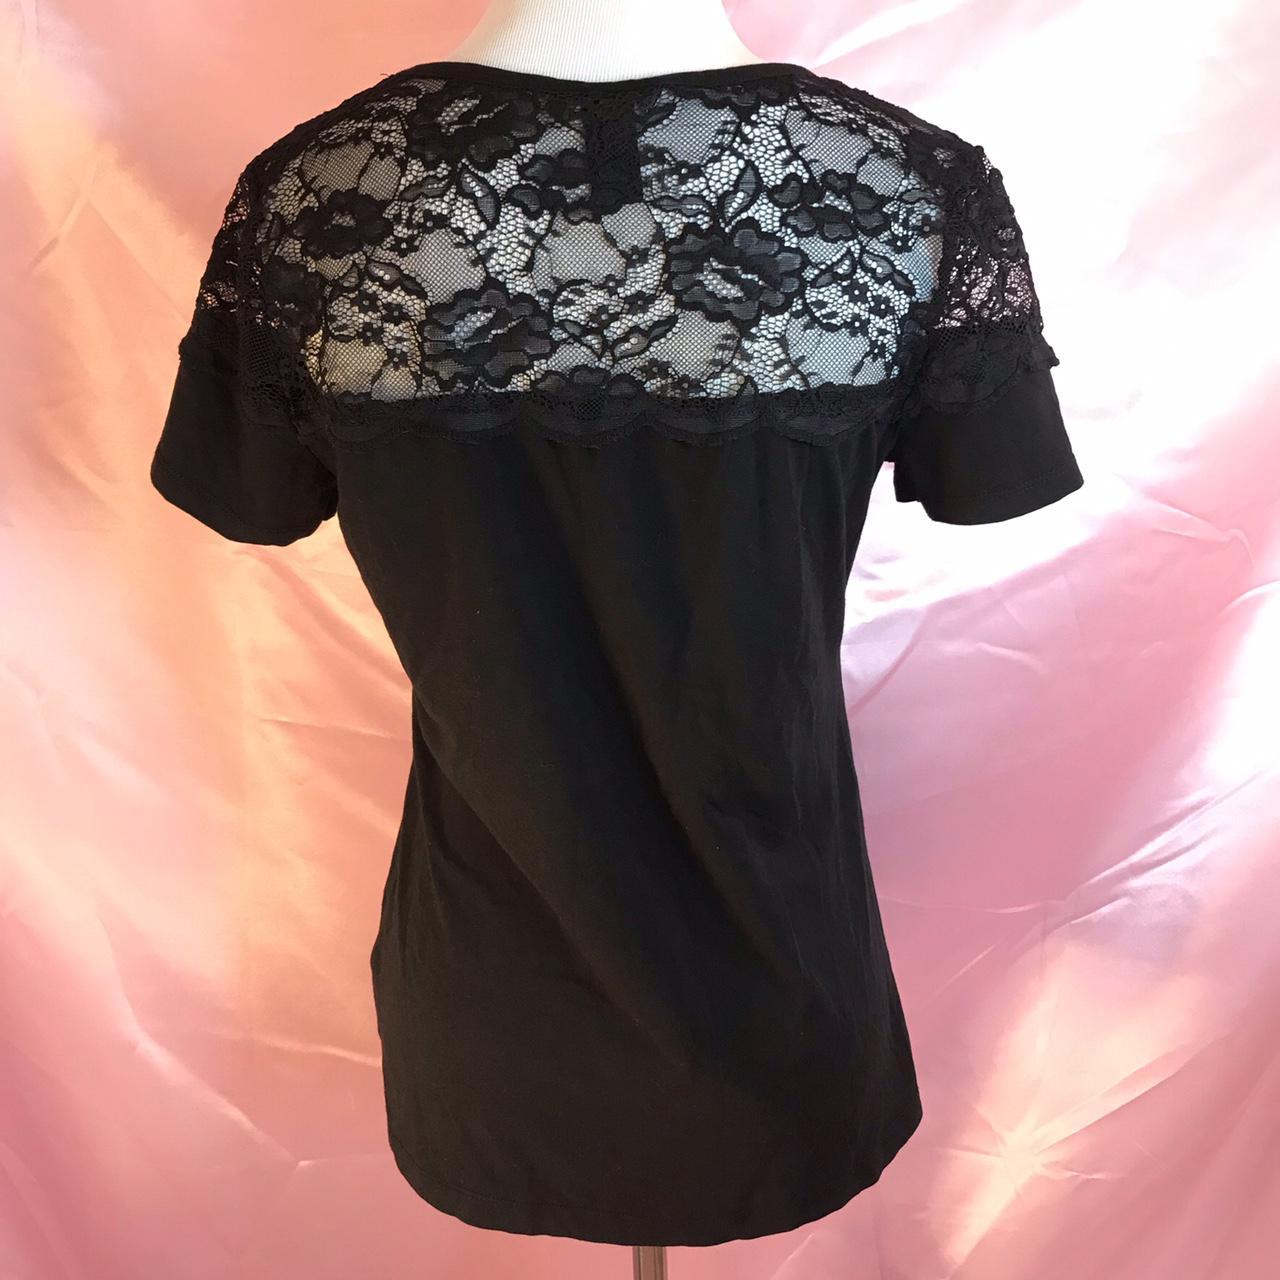 Product Image 3 - H&M black lace panel shirt